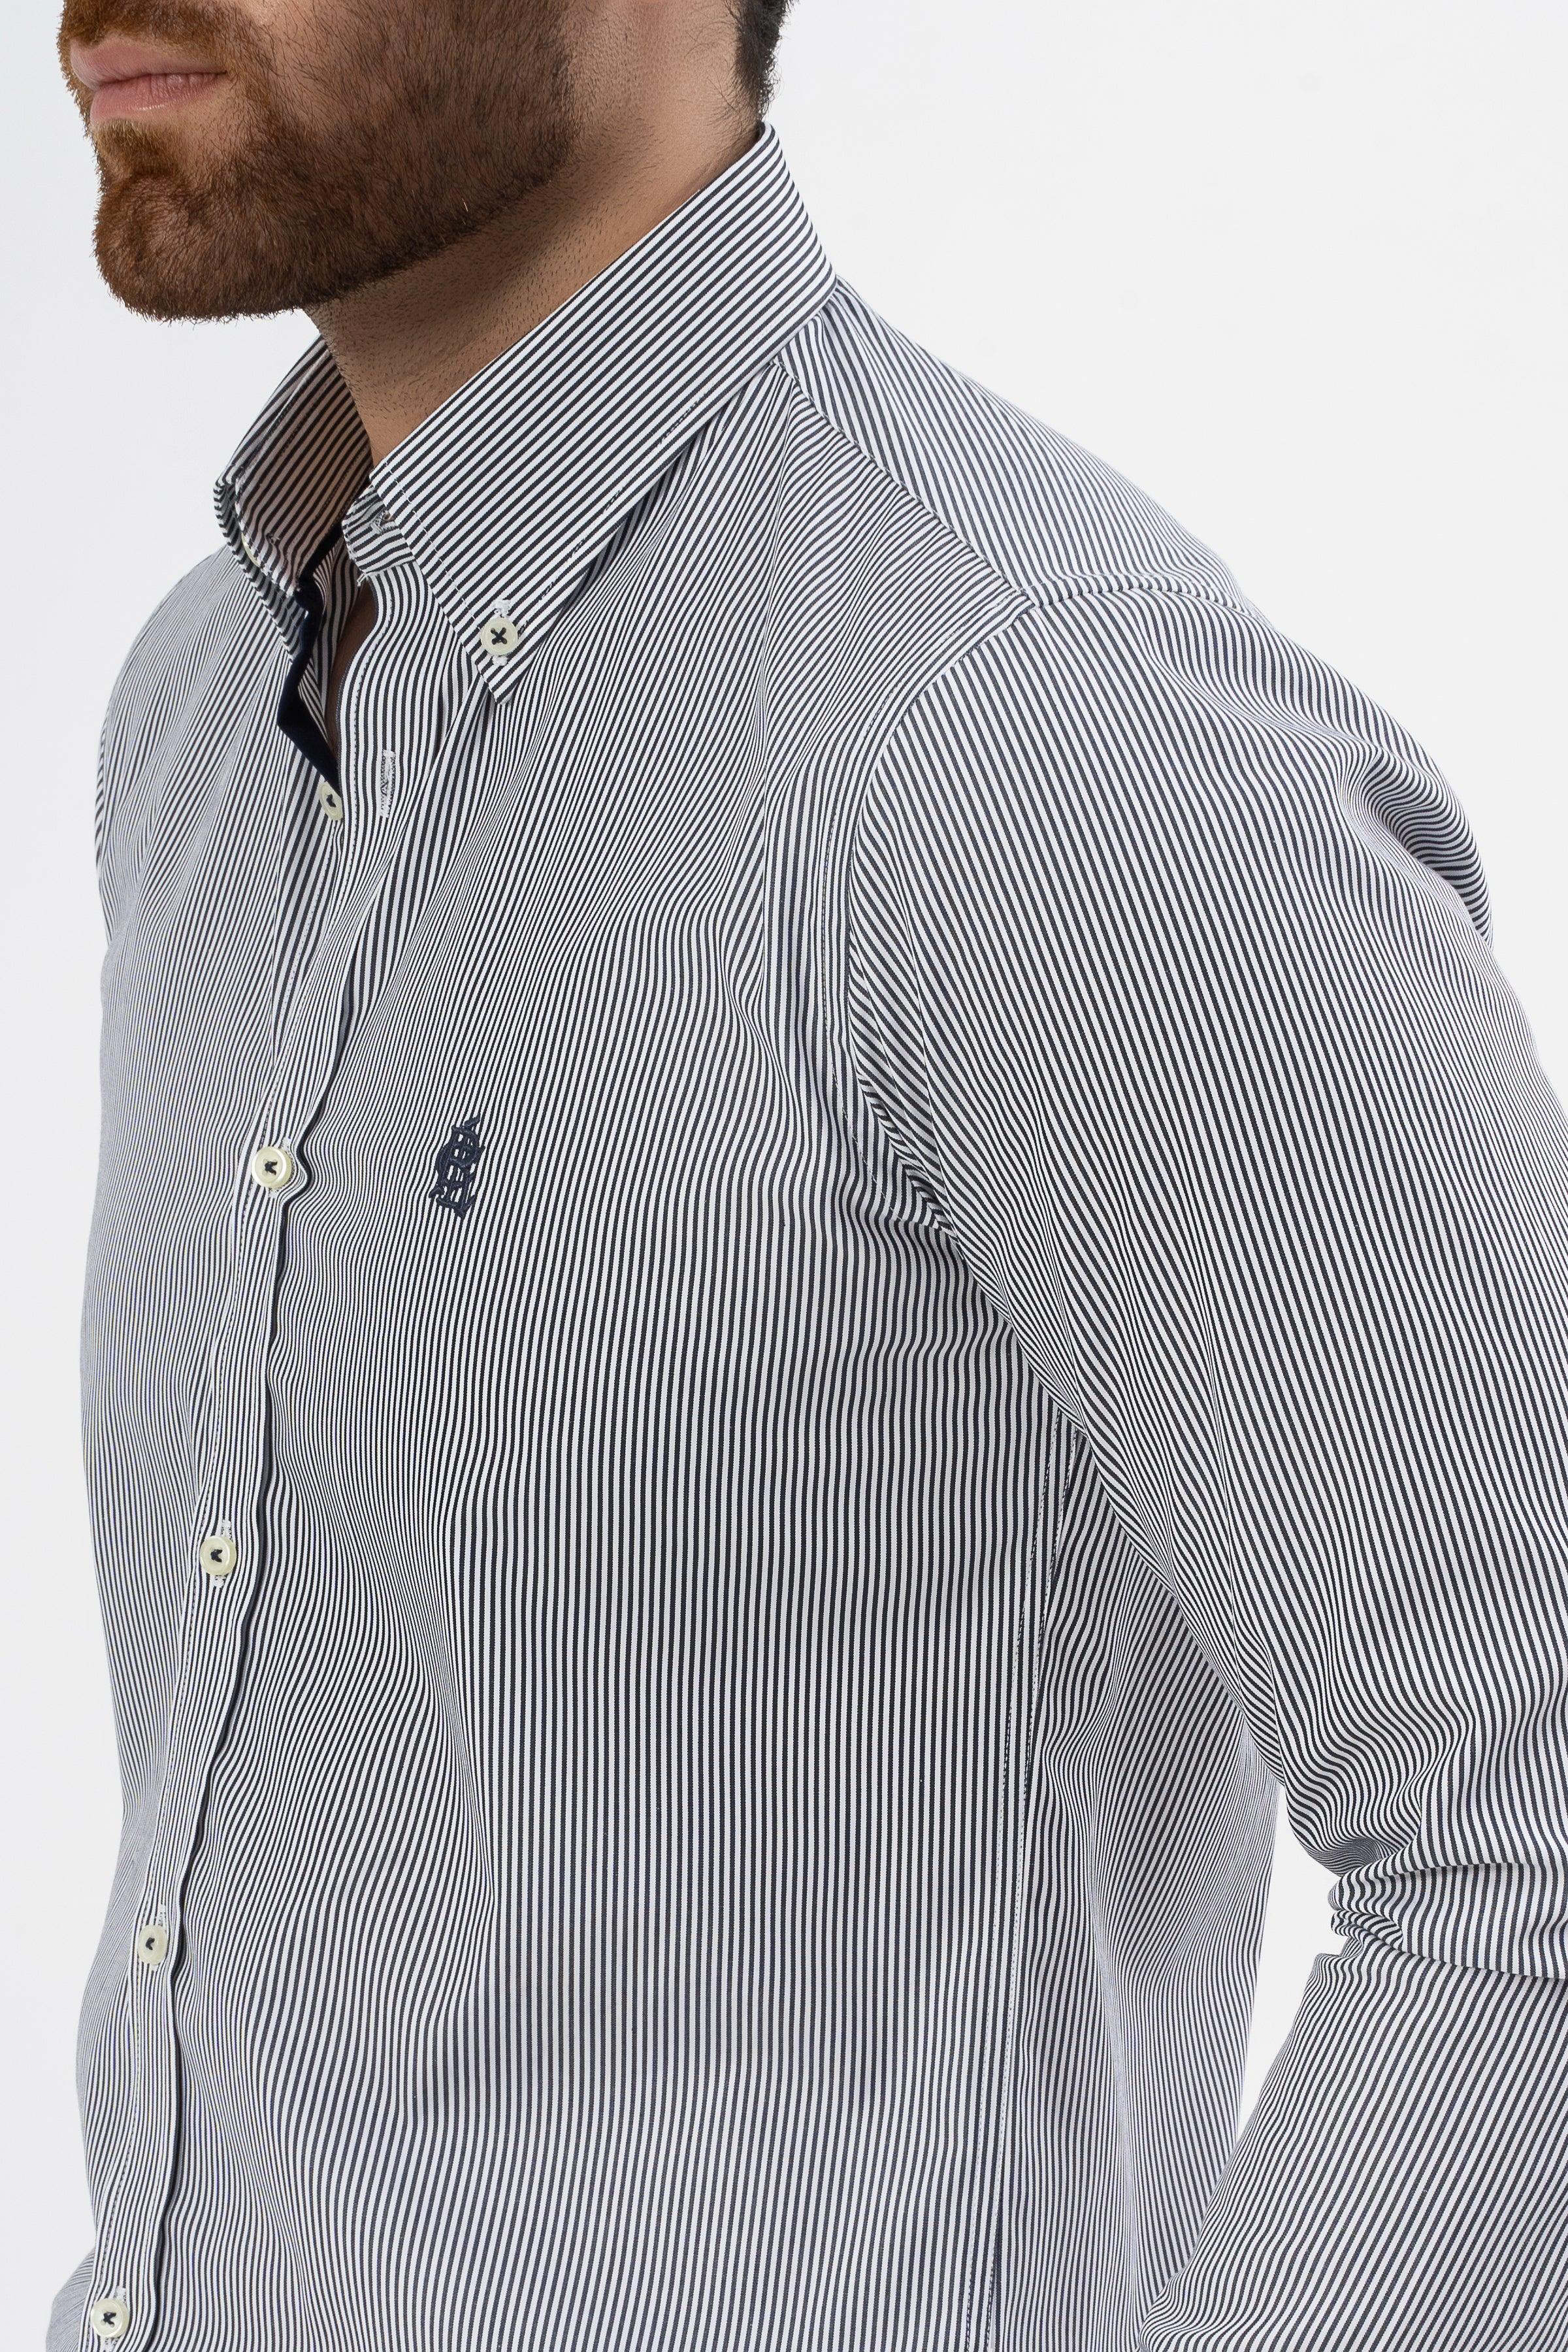 SEMI FORMAL SHIRT WHITE GREY LINE at Charcoal Clothing